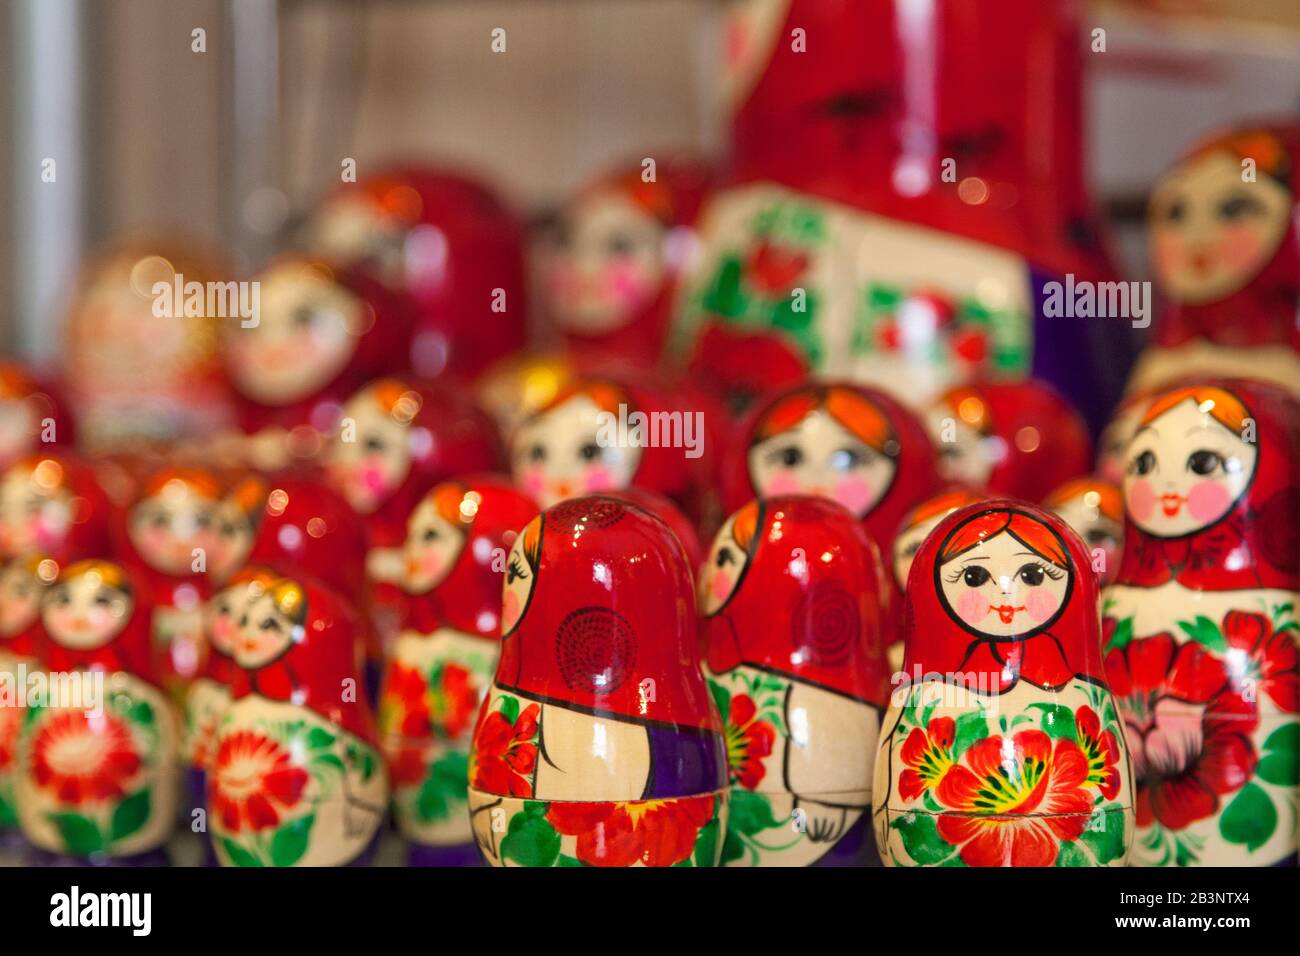 Group of Matryoshka dolls on a market stall. Stock Photo